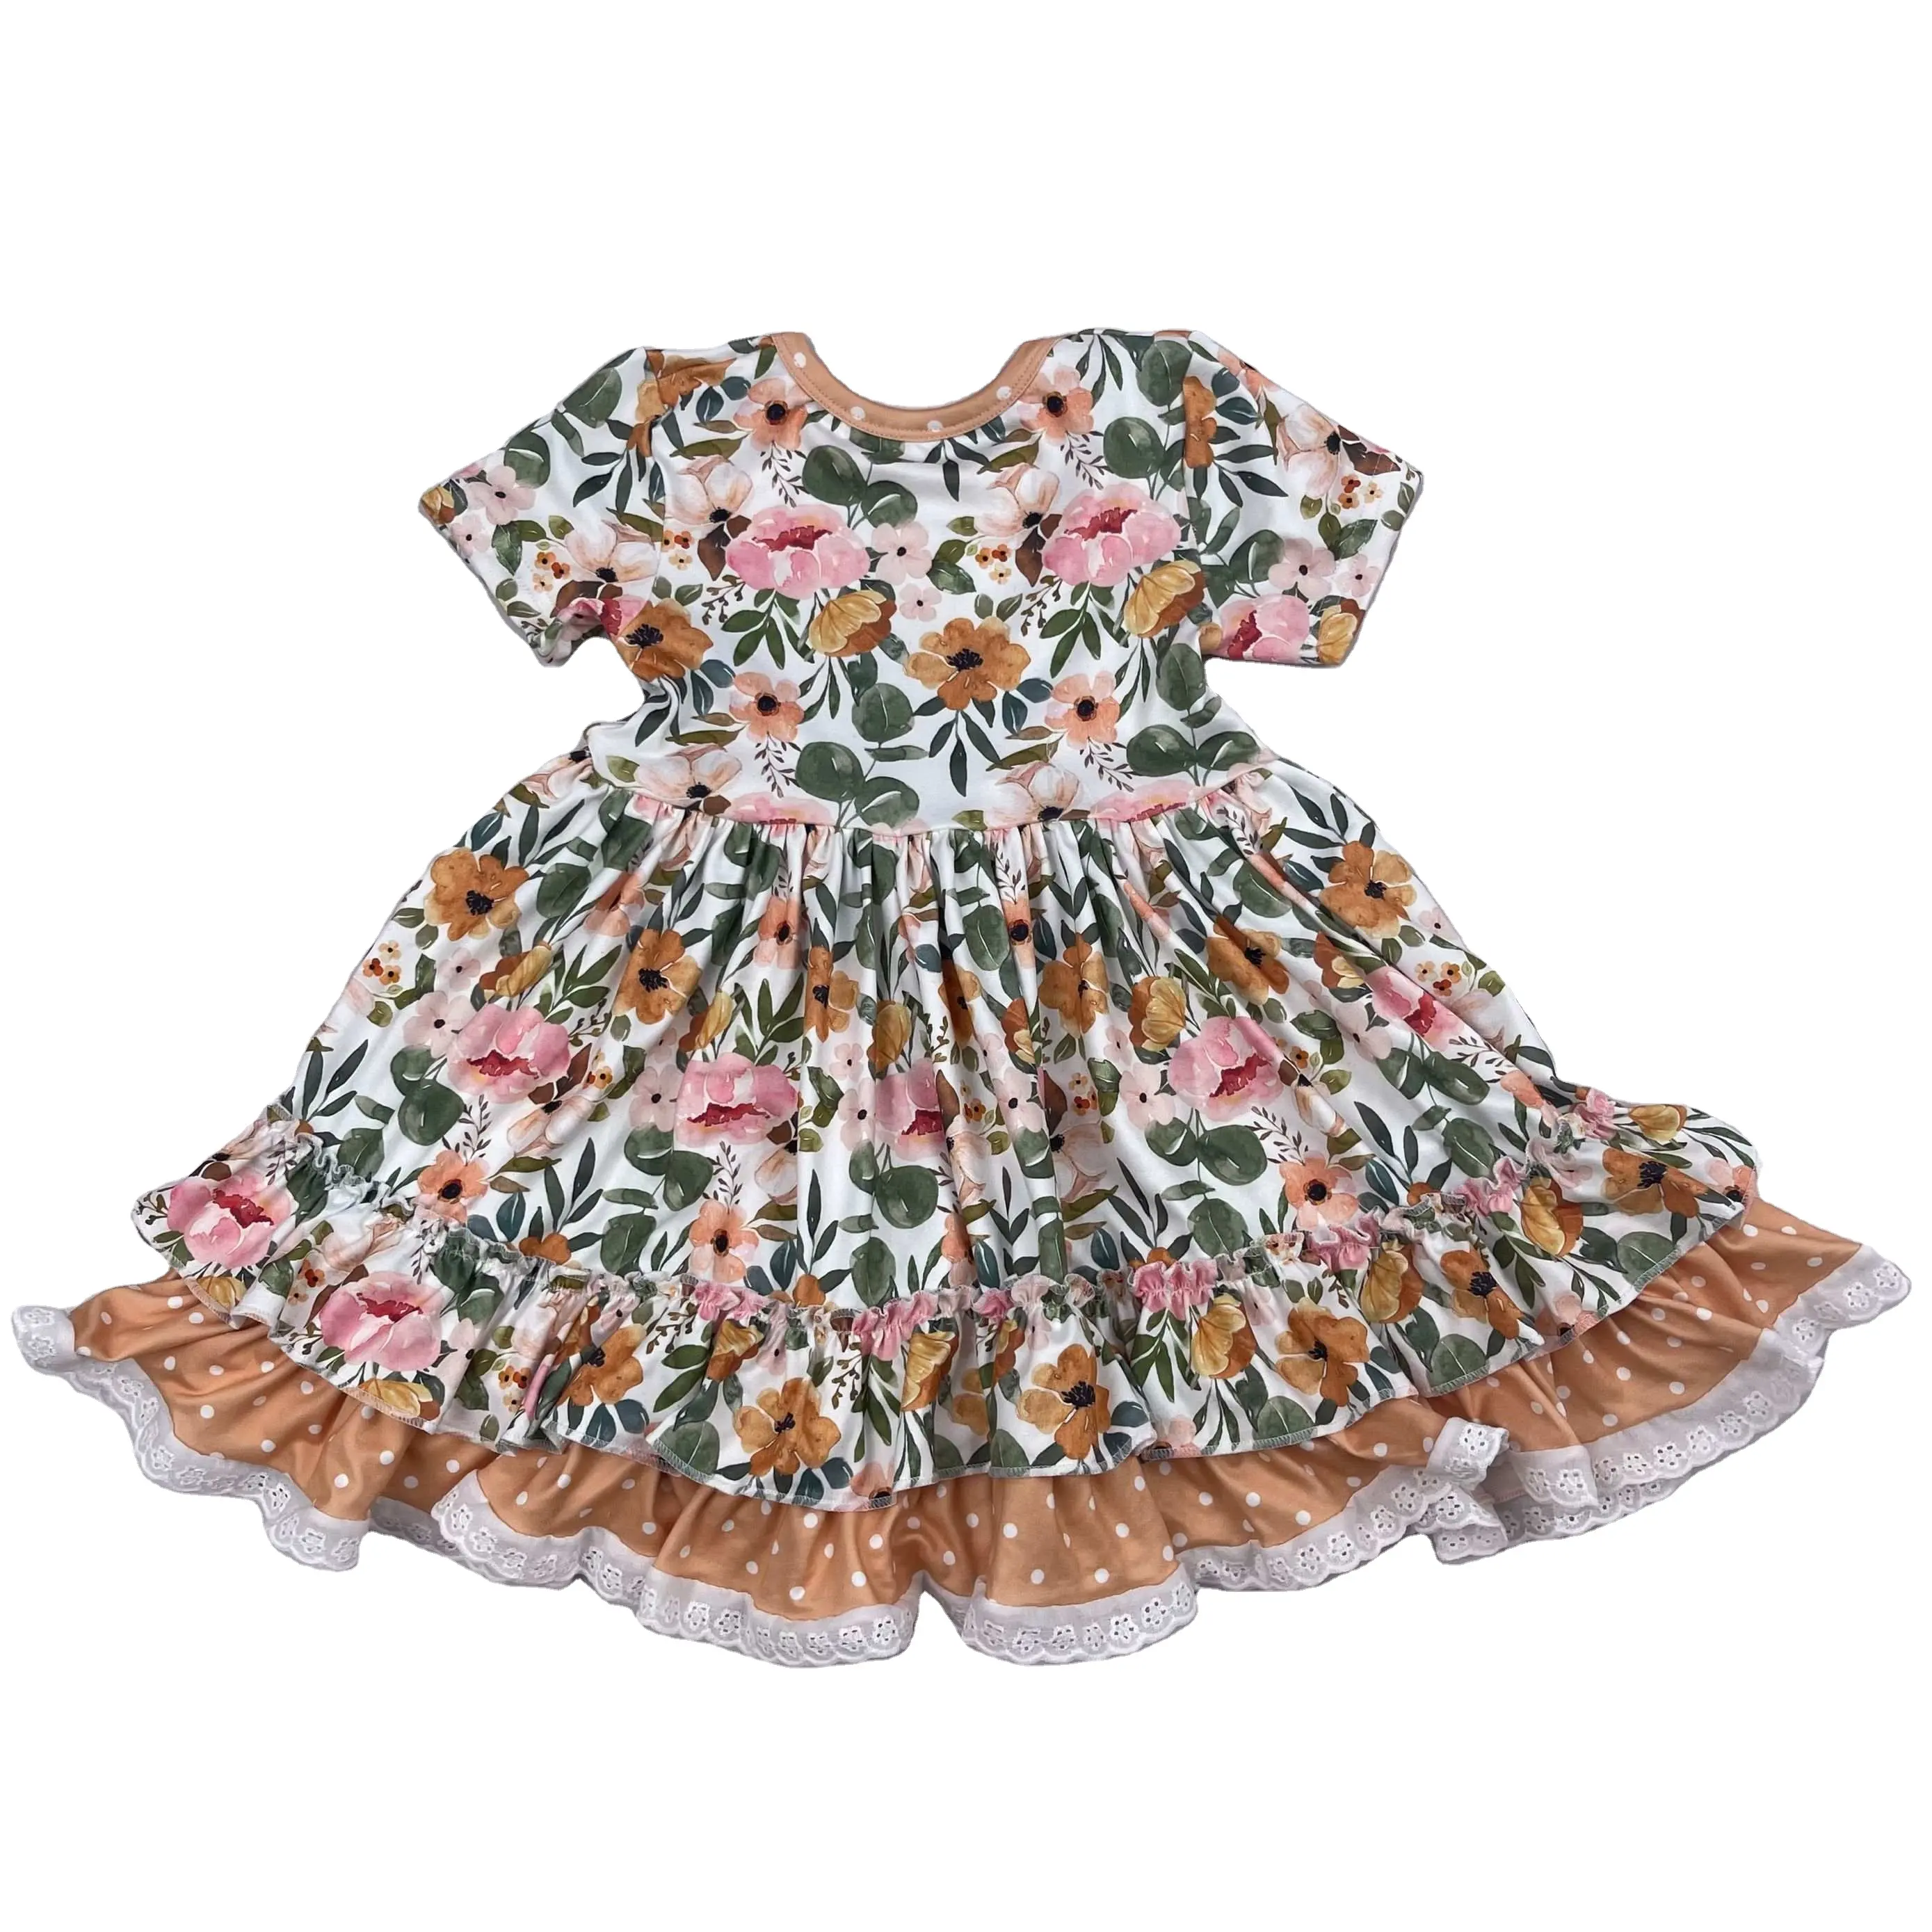 Baby girls Floral Spring Ruffle Party Dress Flower Polka dot Print Custom kids girls boutique twirl dresses 2-12